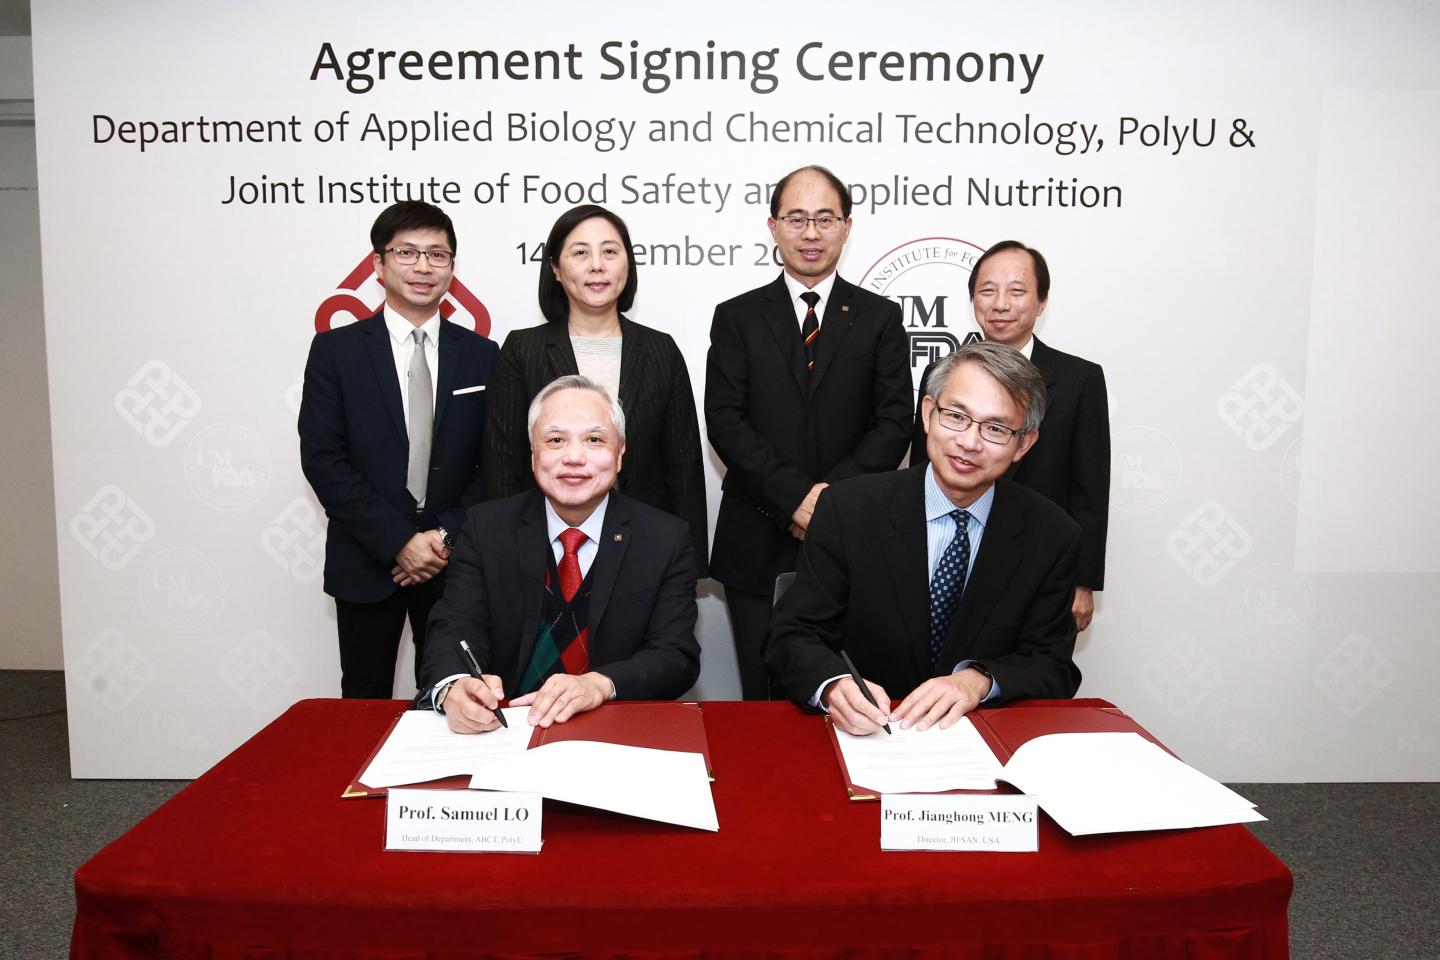 PolyU, JIFSAN Agreement Signing Ceremony